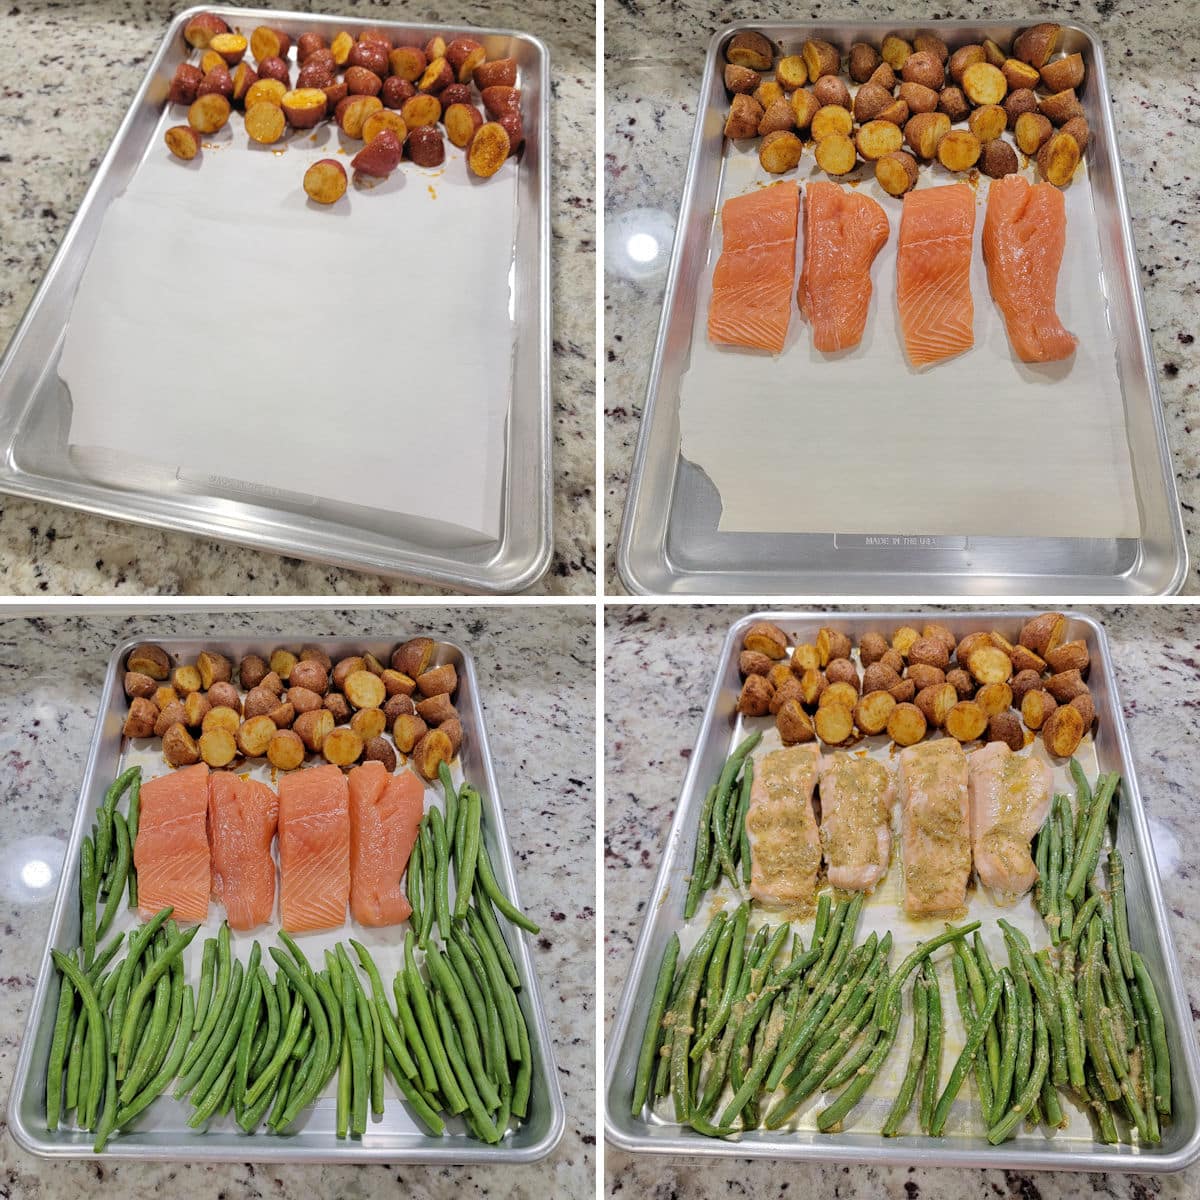 Assembling salmon and veggies on a sheet pan.